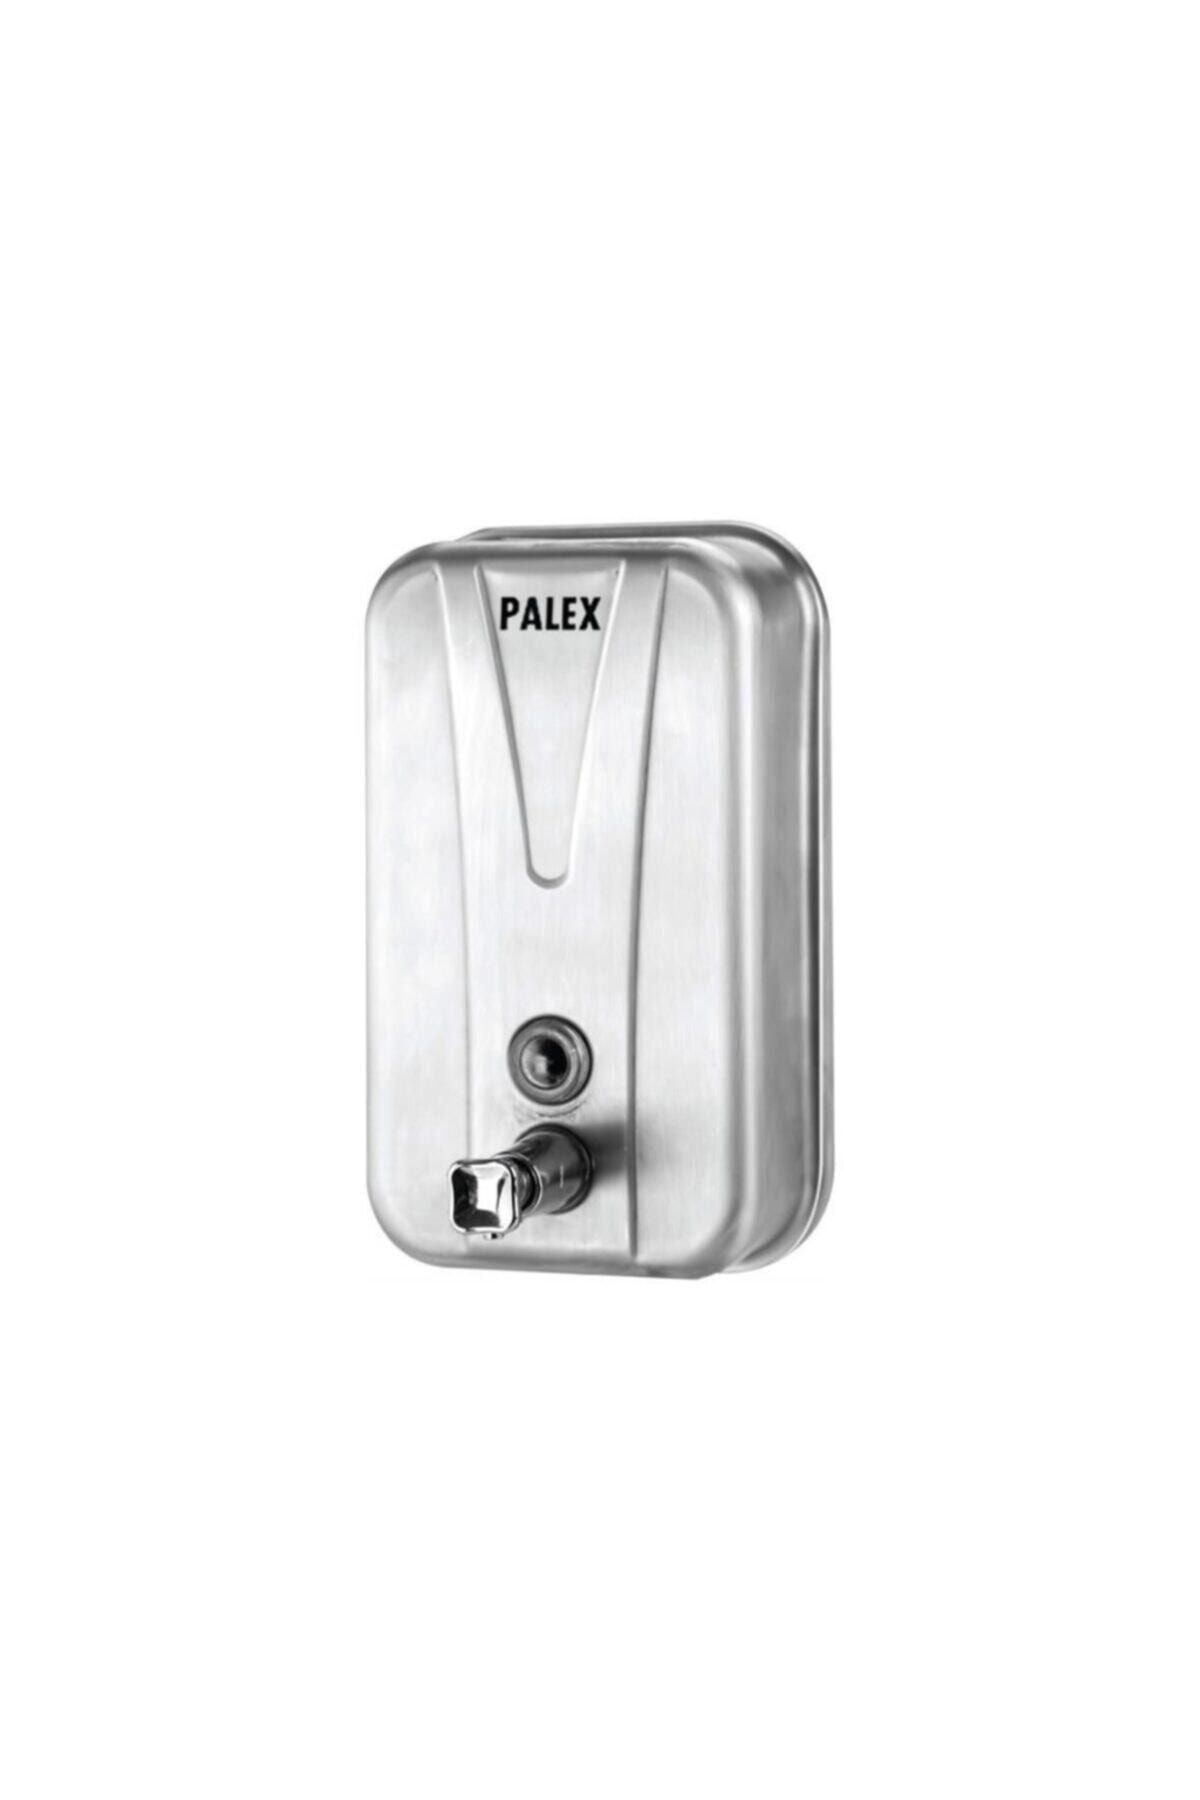 Palex 3804-1 Krom Sıvı Sabun Dispenseri 1000 Cc 304 Kalite